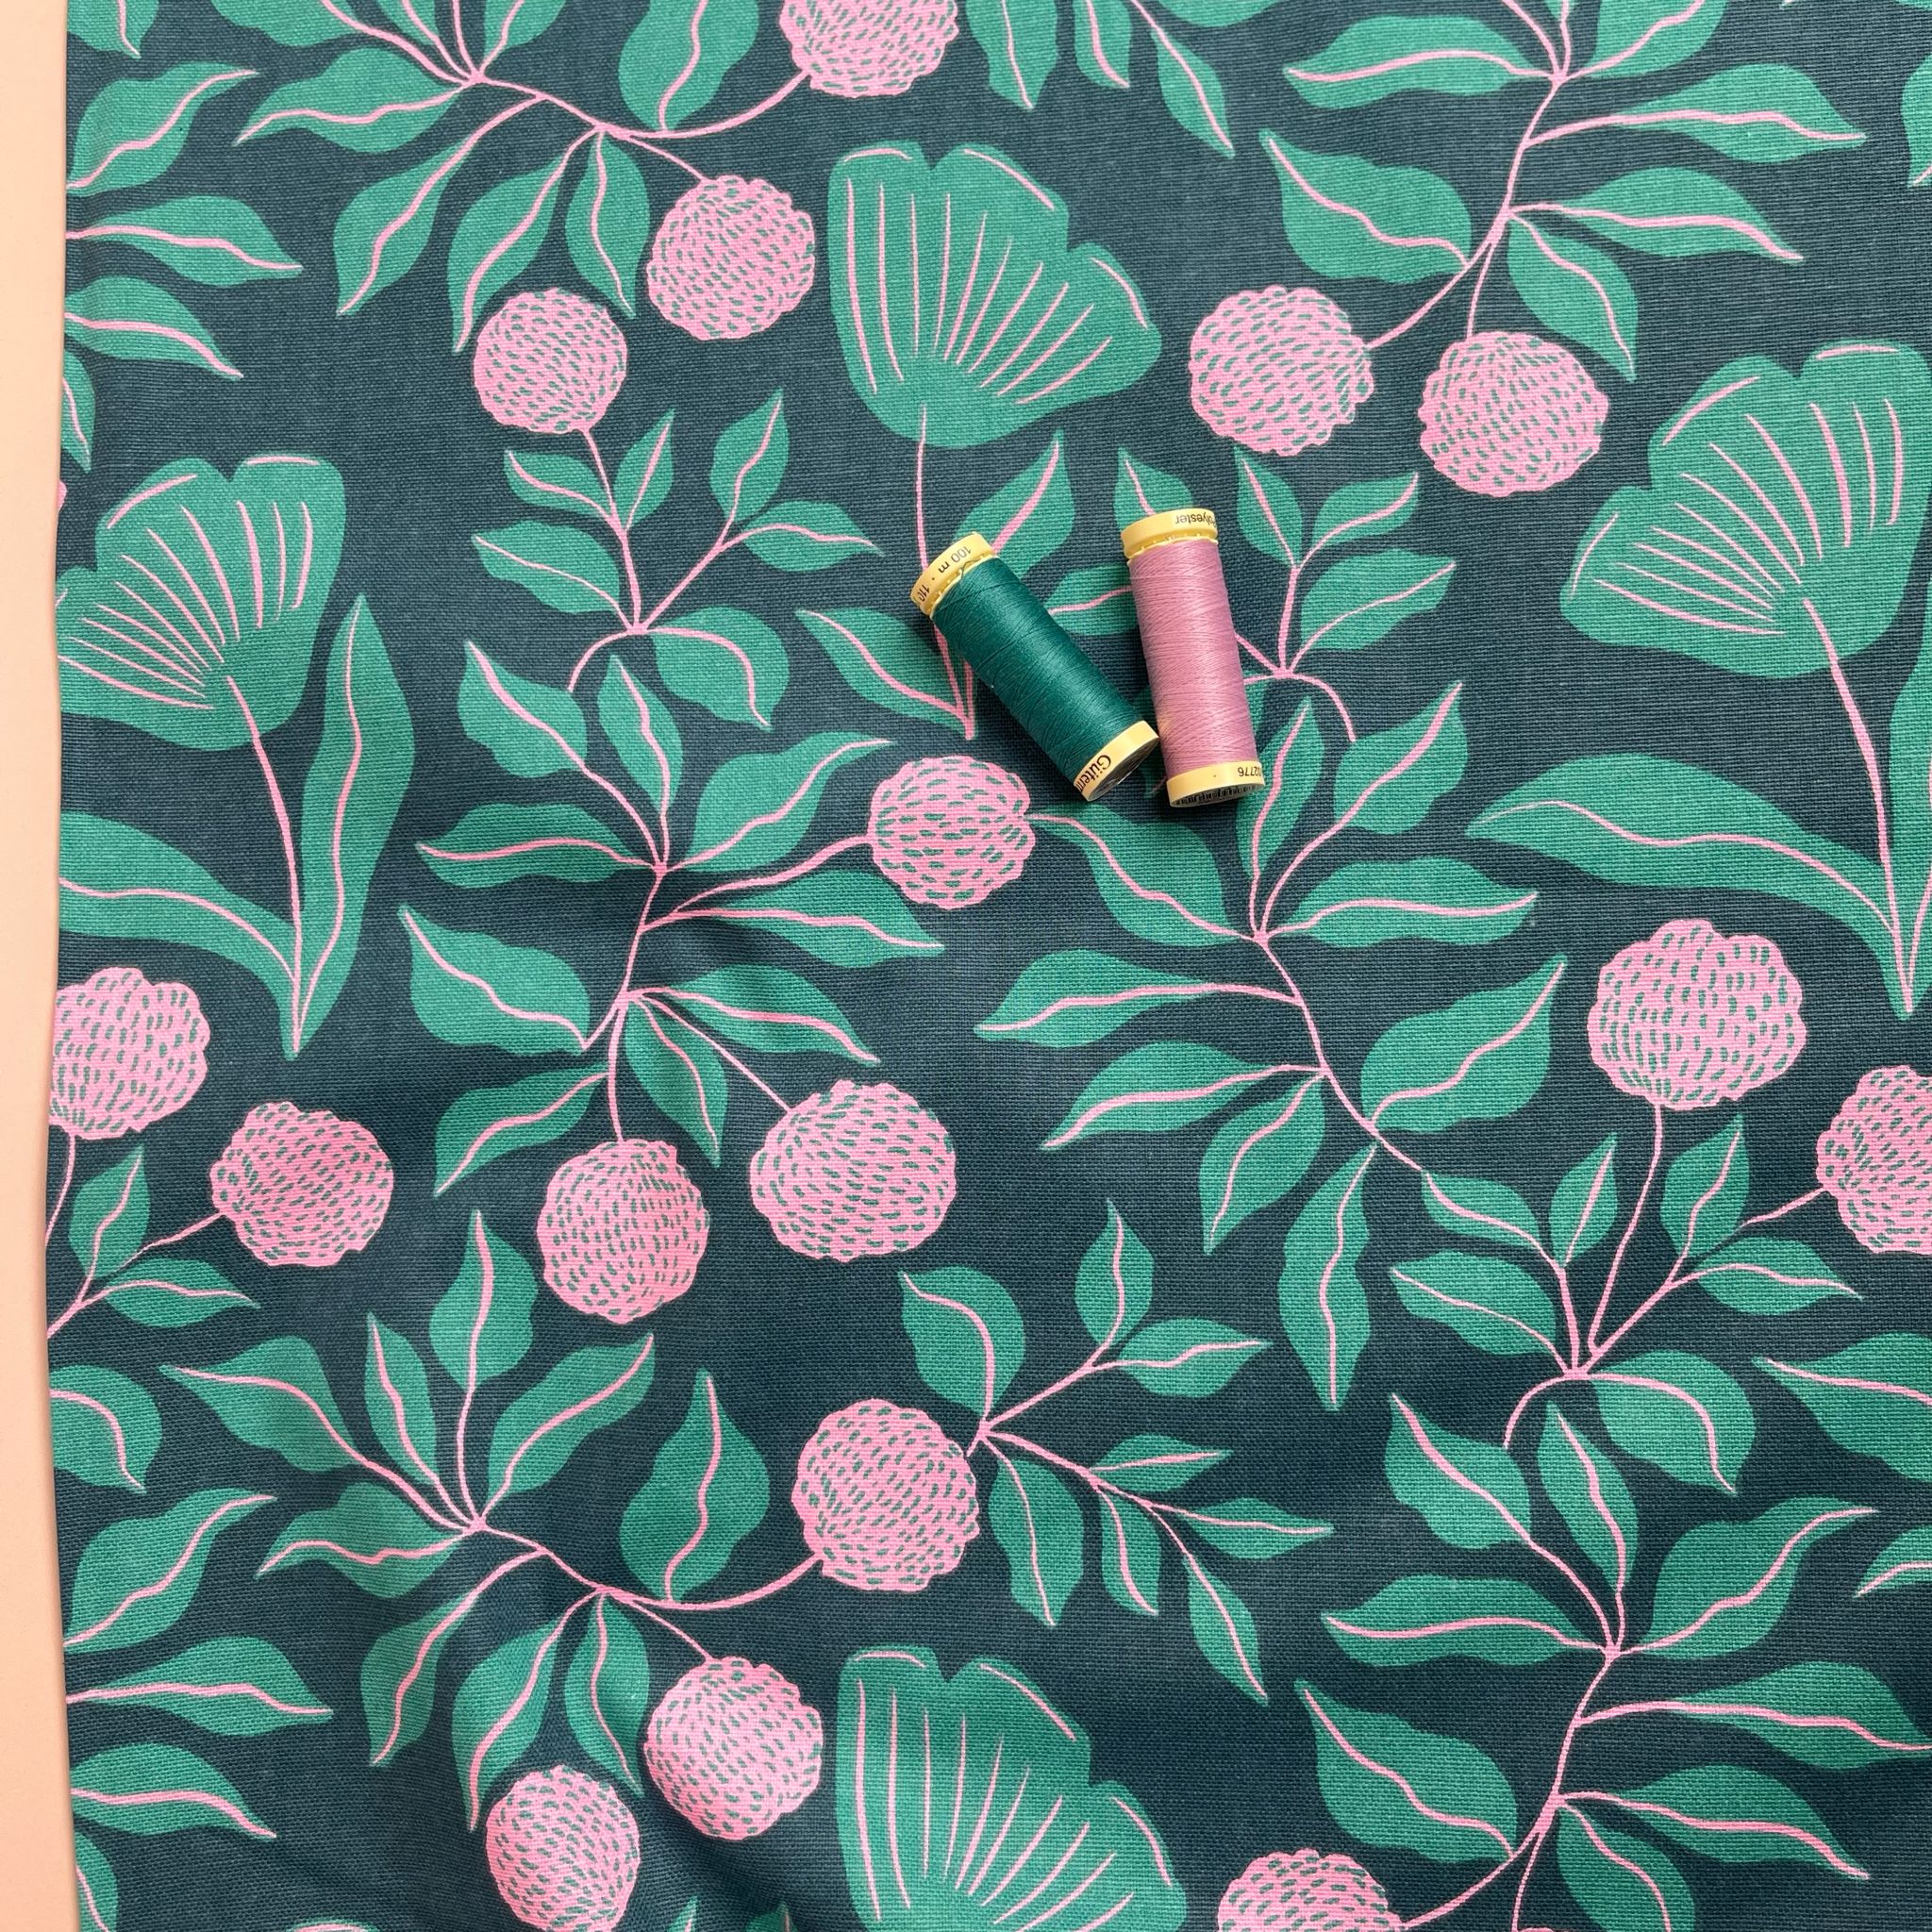 Nerida Hansen - Vines Teal Cotton Canvas Fabric